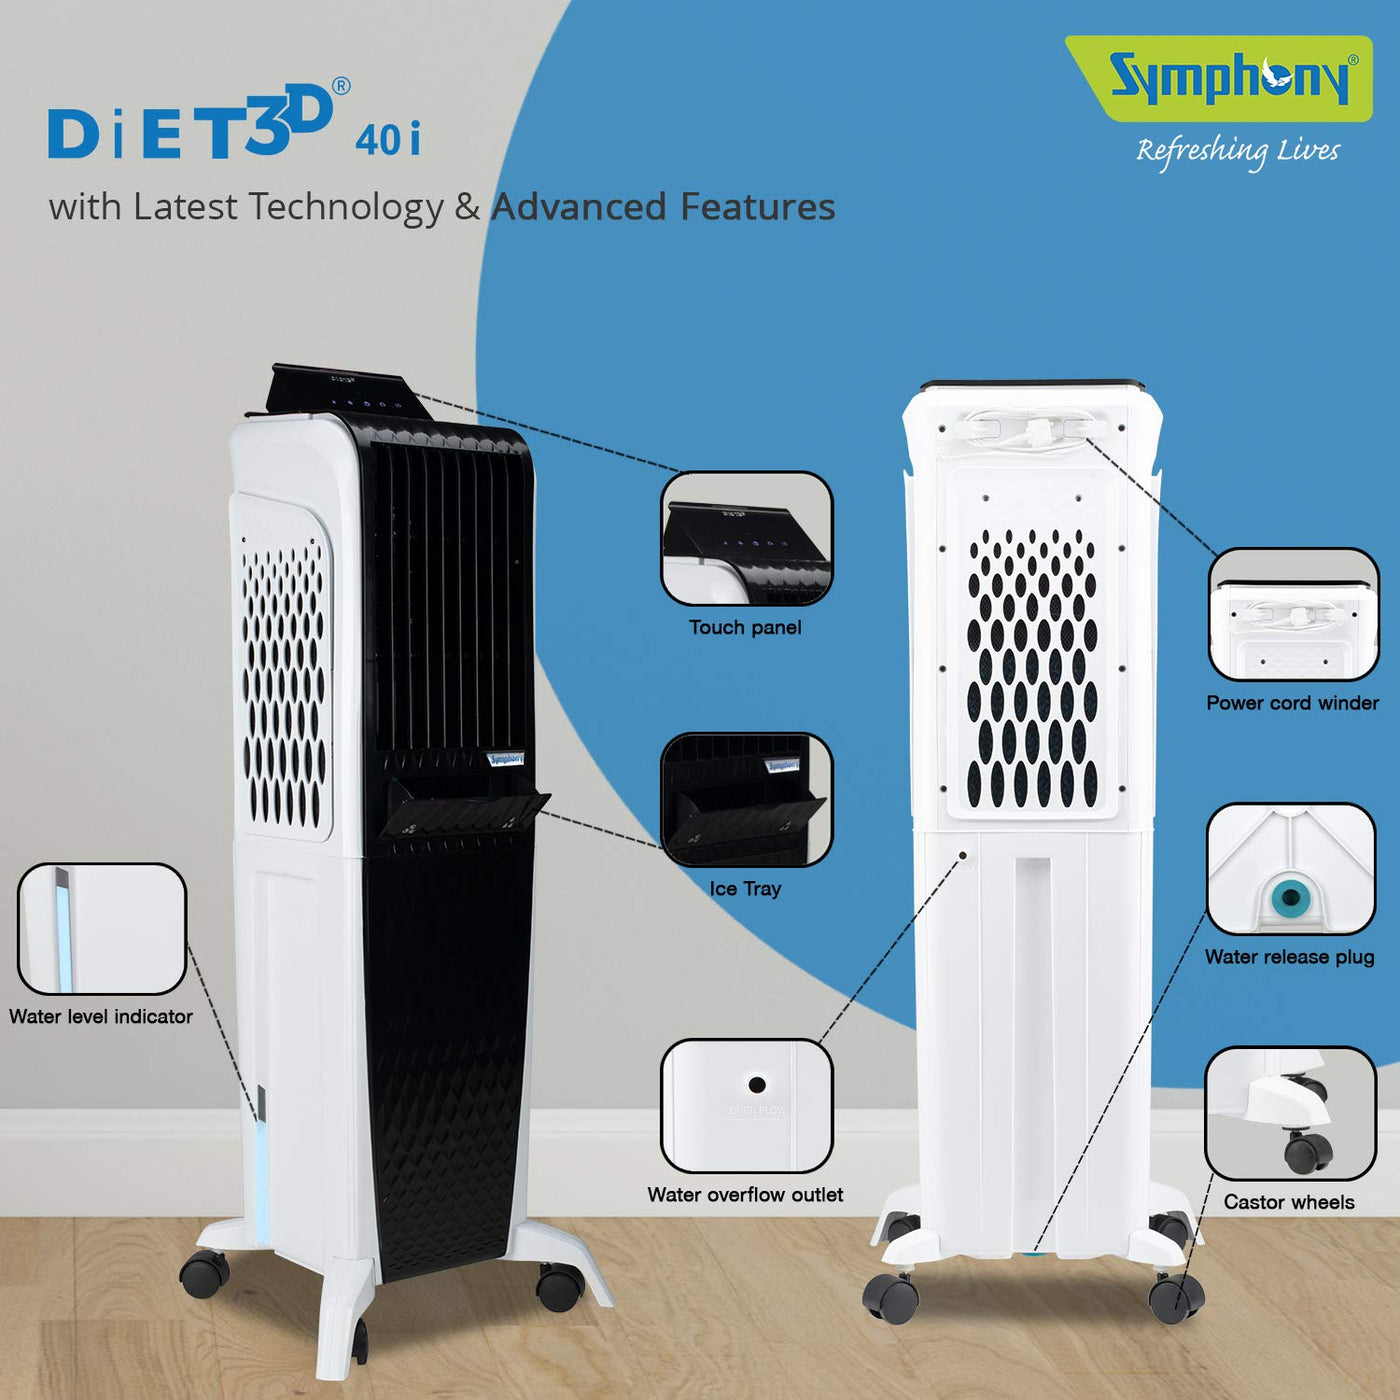 Symphony Diet 3D 40i Portable Tower Air Cooler